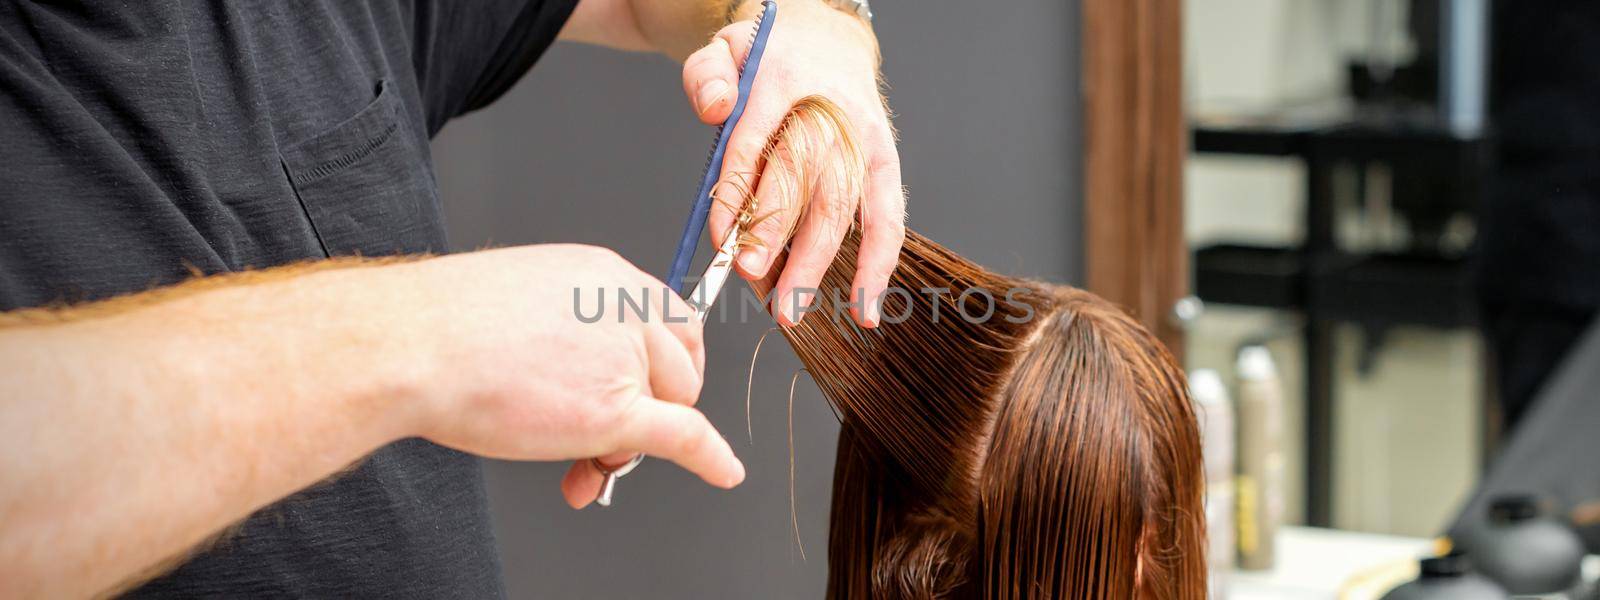 Woman having a new haircut. Male hairstylist cutting brown hair with scissors in a hair salon